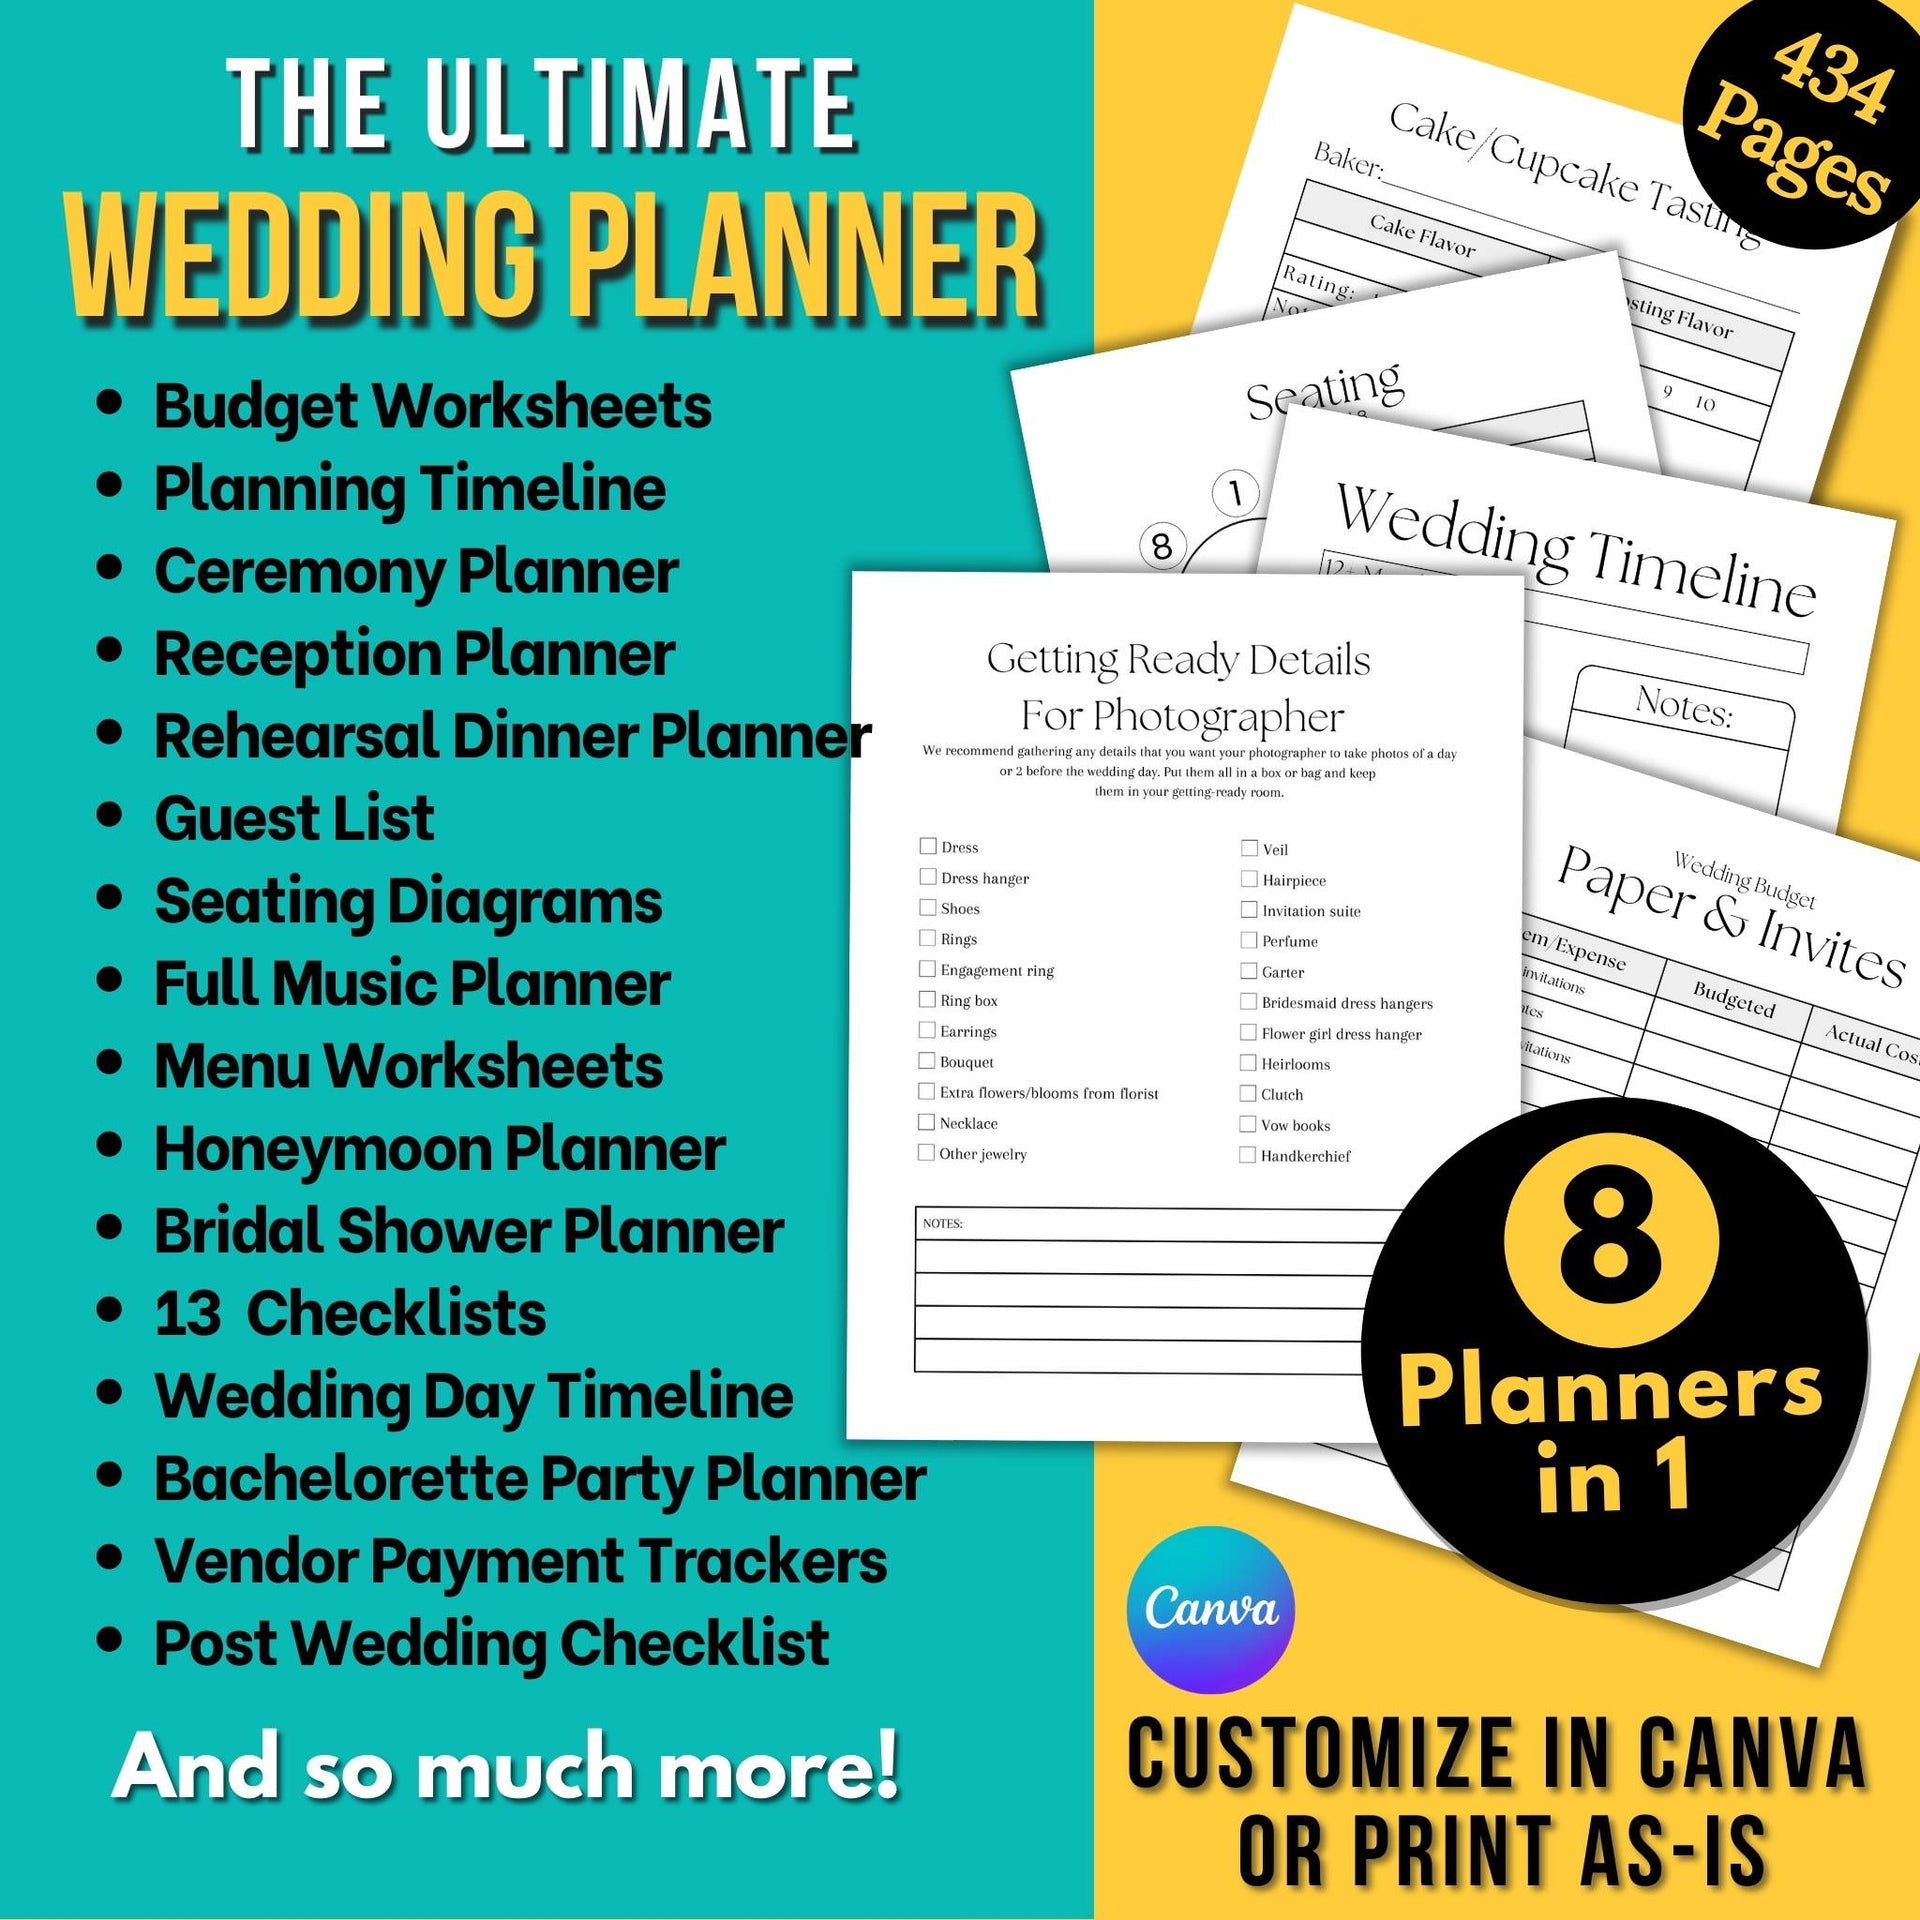 Wedding Planner Post Template